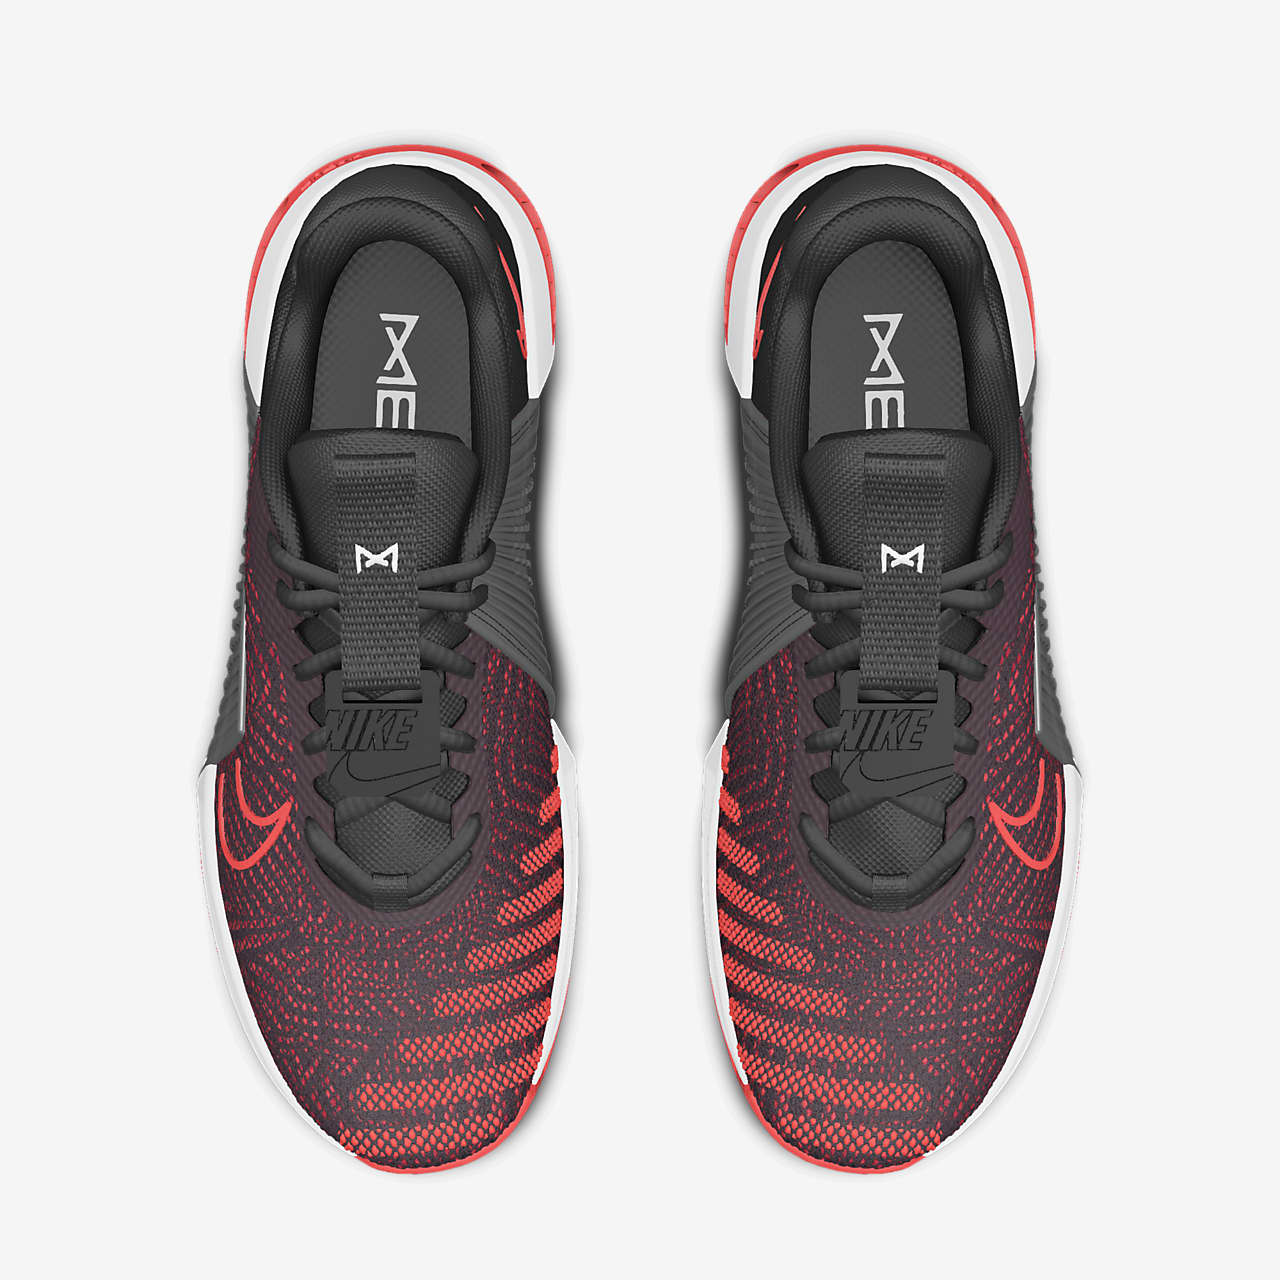 Nike Training Metcon 9 sneakers in black and pink metallic